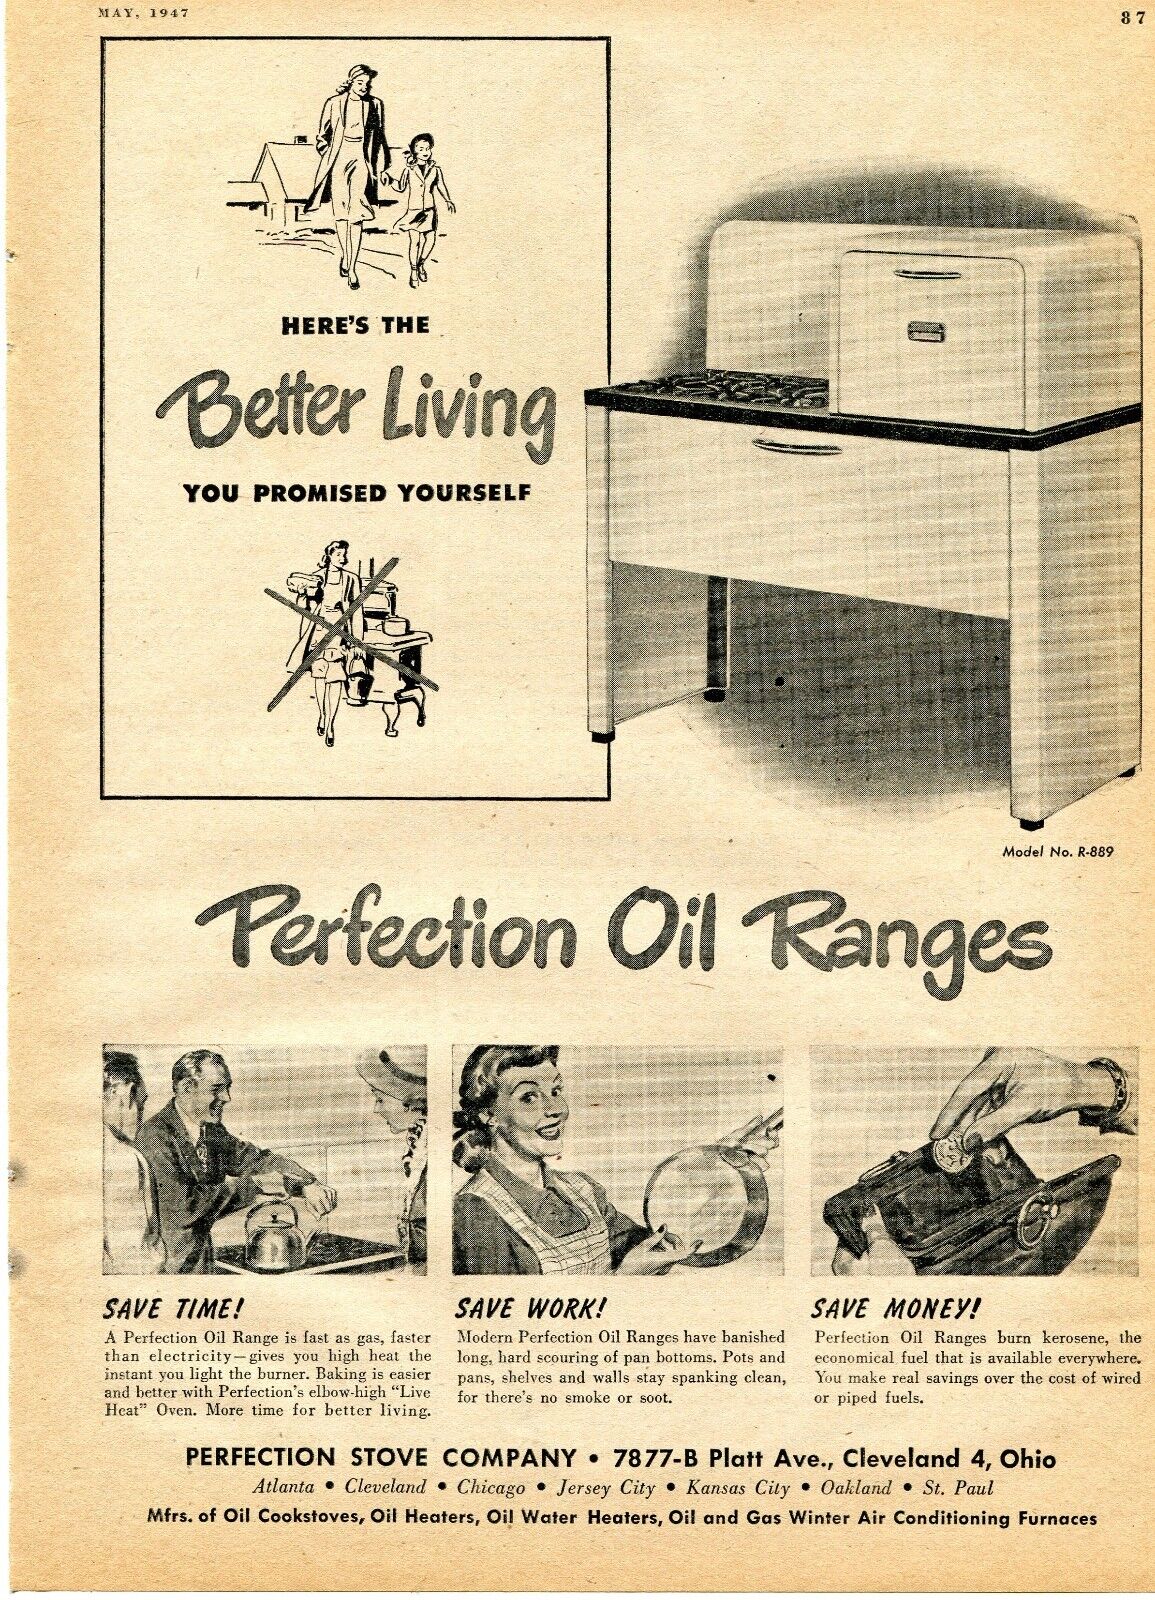 1947 Print Ad of Perfection Oil Range Oven Model R-889 better living